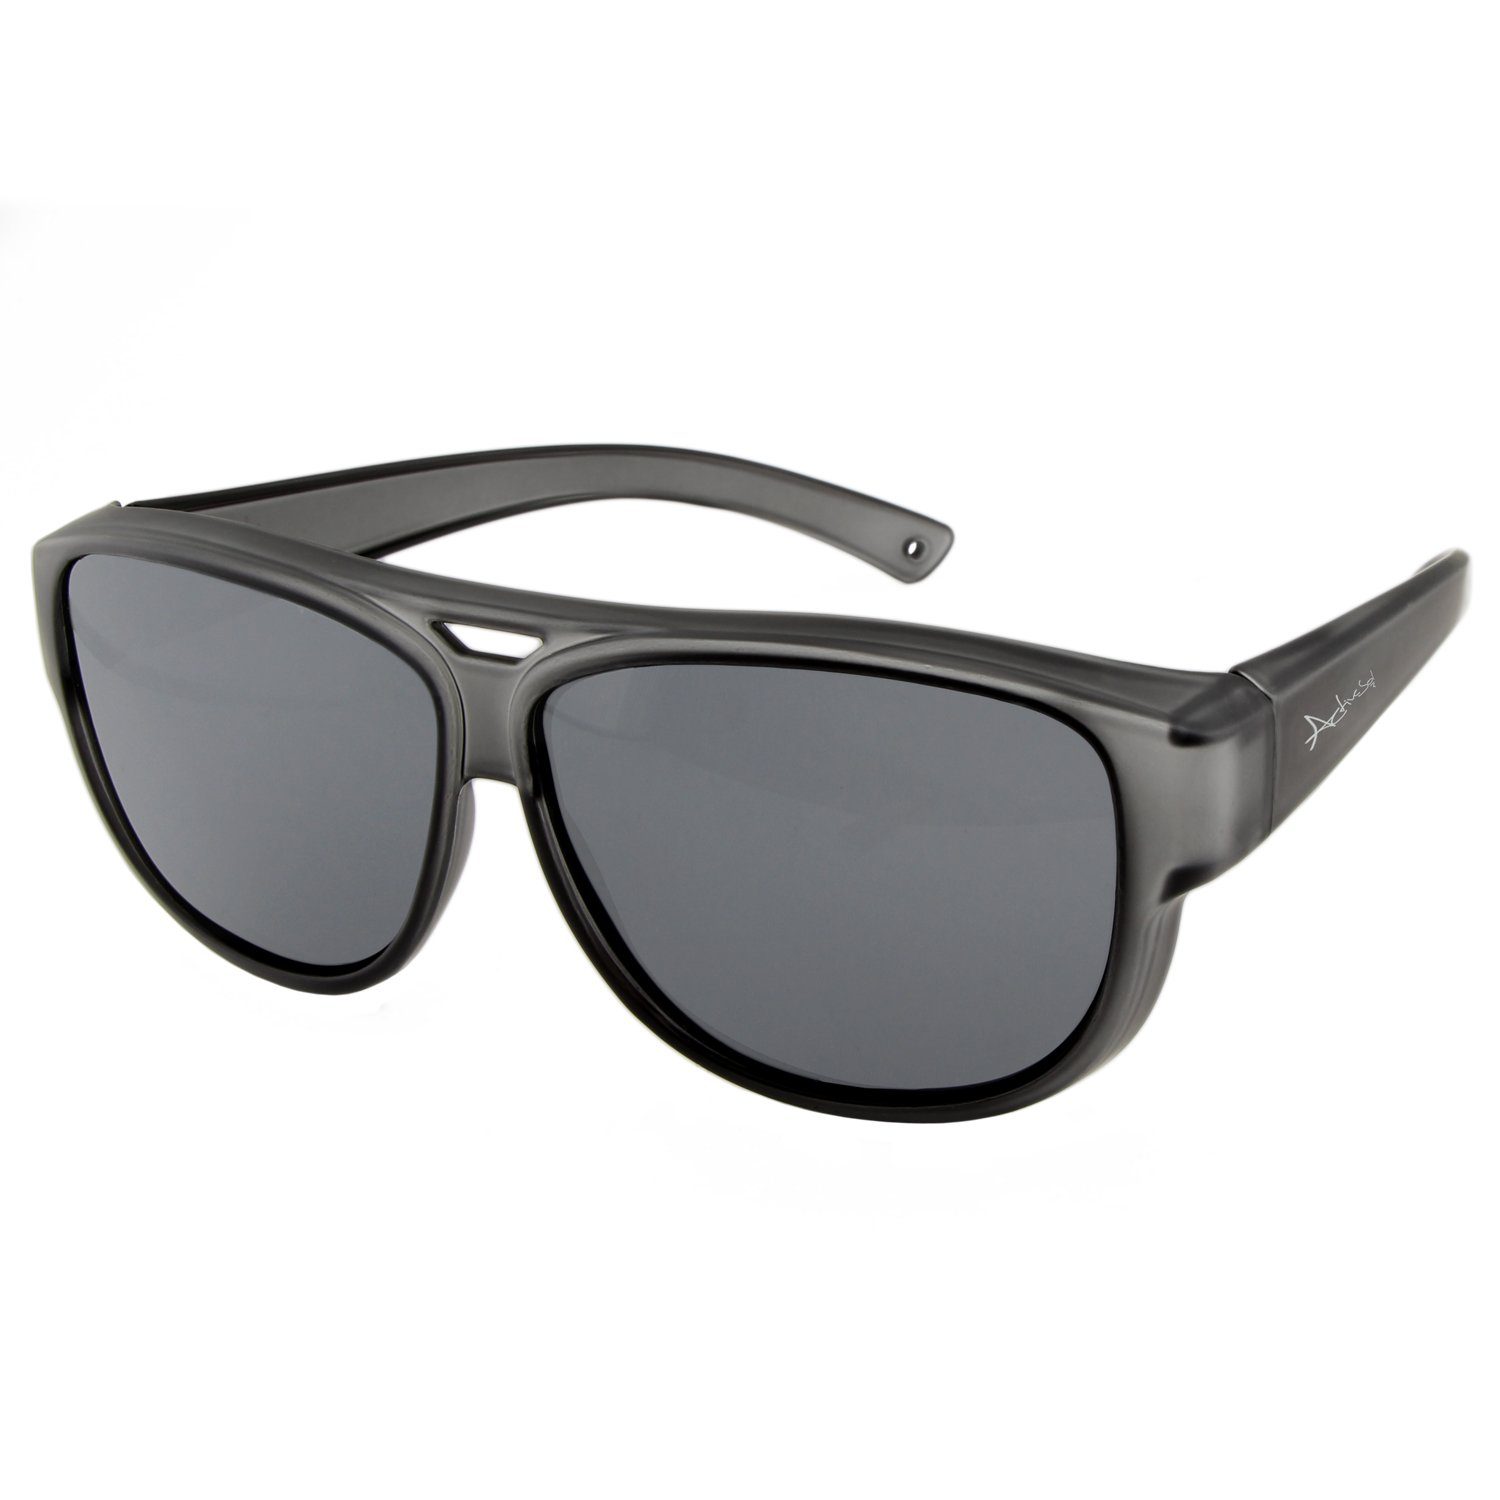 ActiveSol SUNGLASSES Sonnenbrille Überziehsonnenbrille El Aviador Grau | Sonnenbrillen